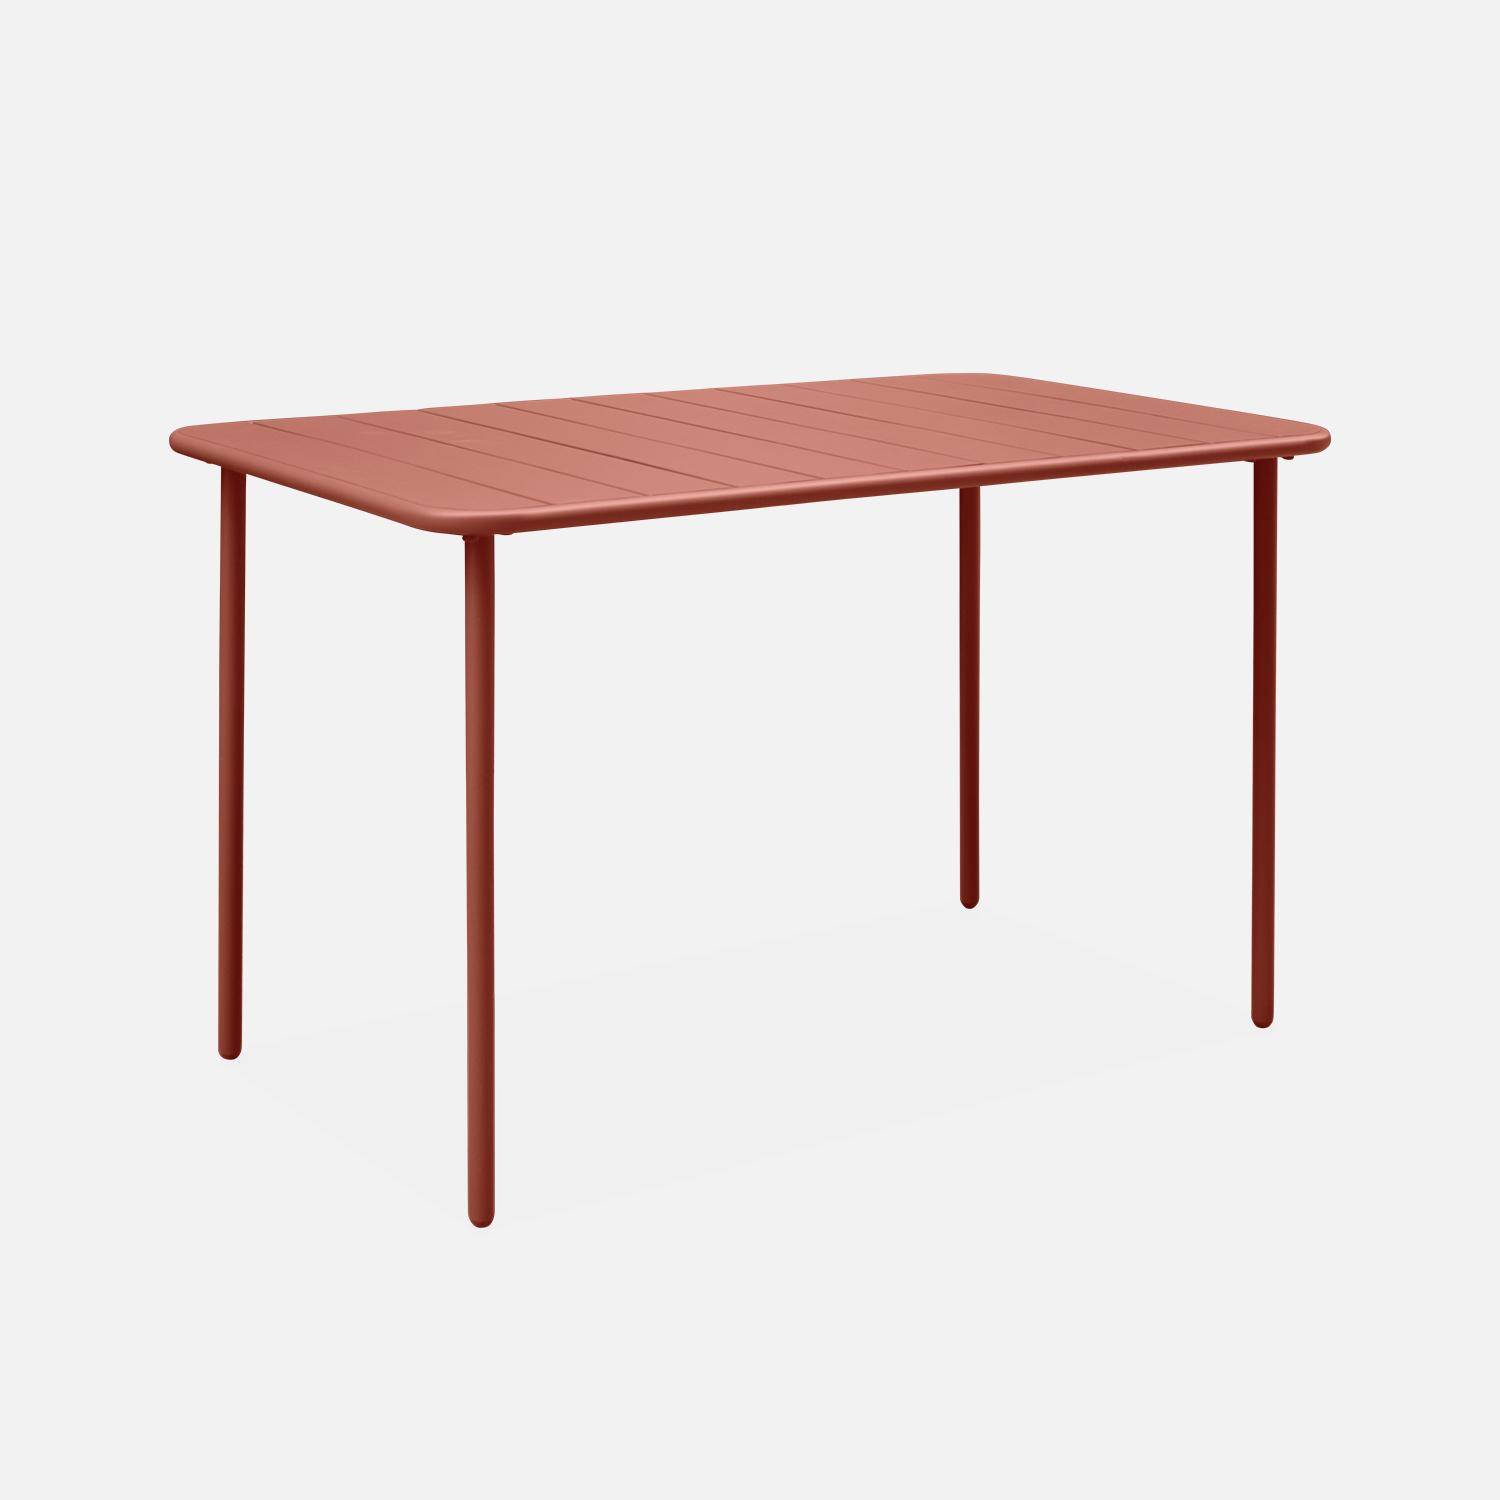 4-seater rectangular steel garden table, 120x70cm - Amelia - Terracotta Photo3